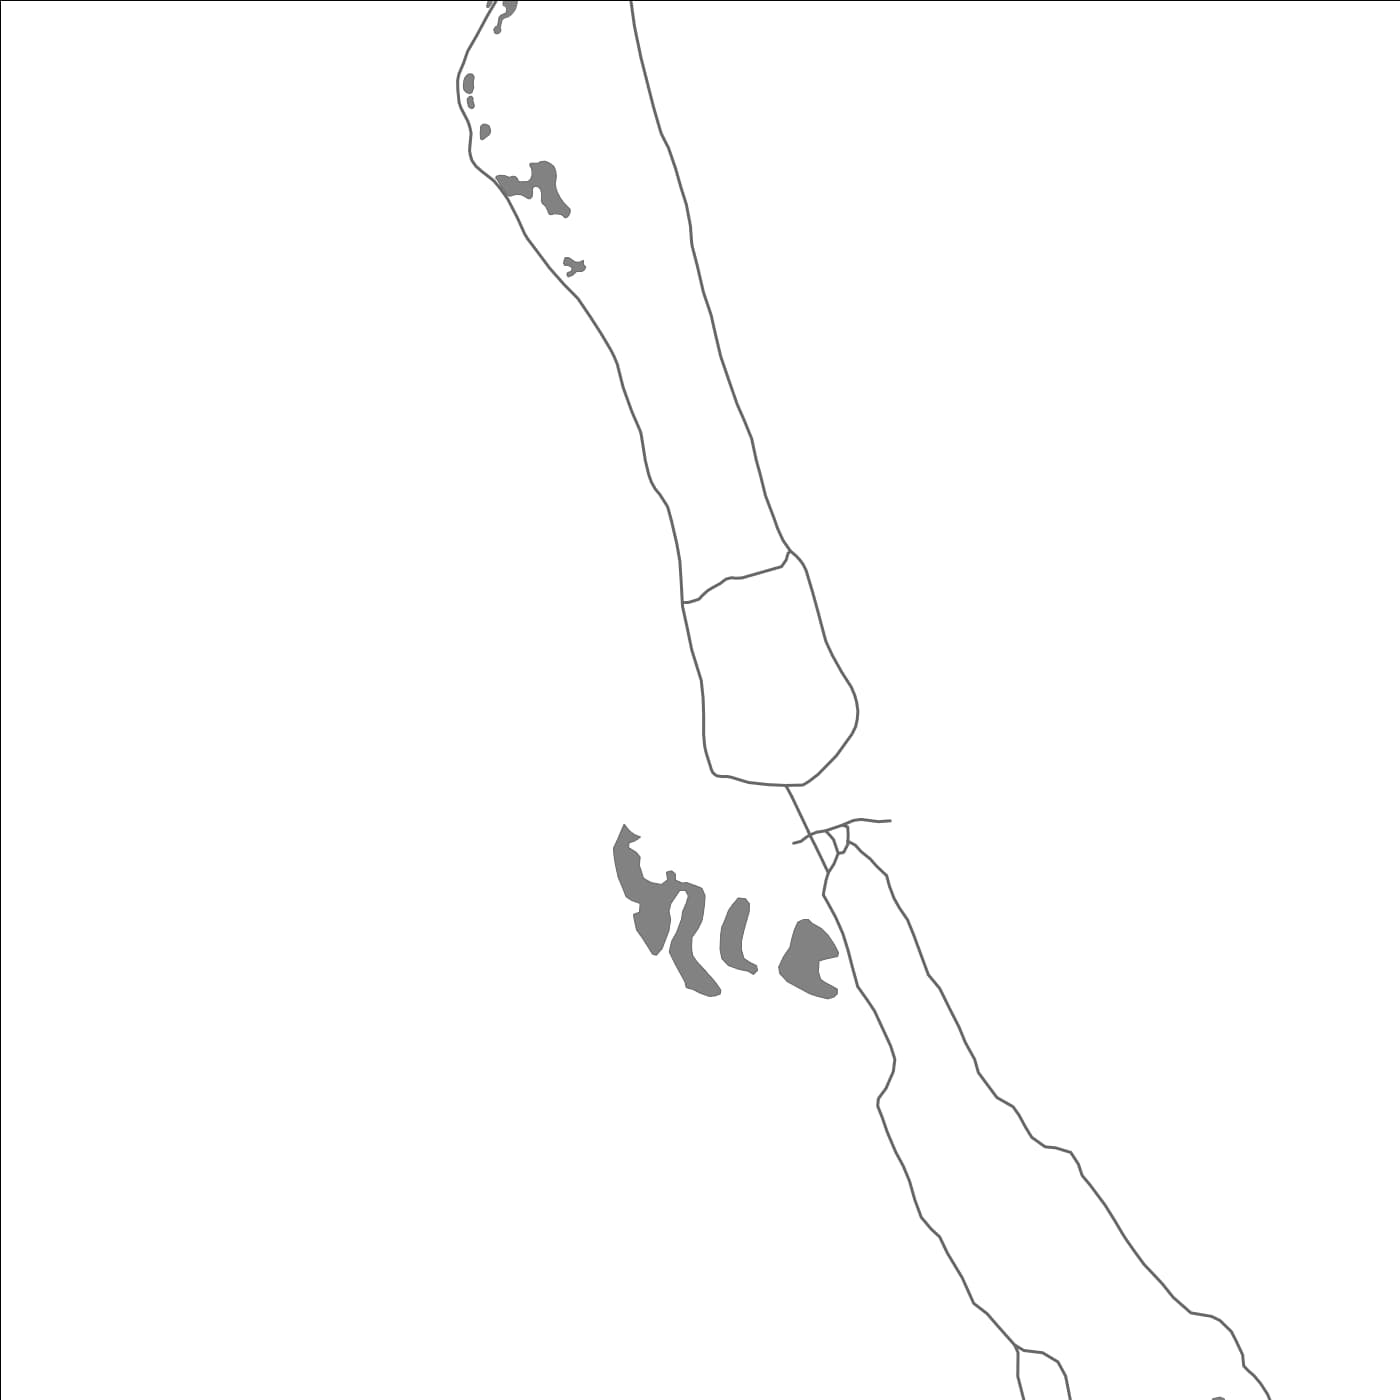 ROAD MAP OF NORAUEA, KIRIBATI BY MAPBAKES